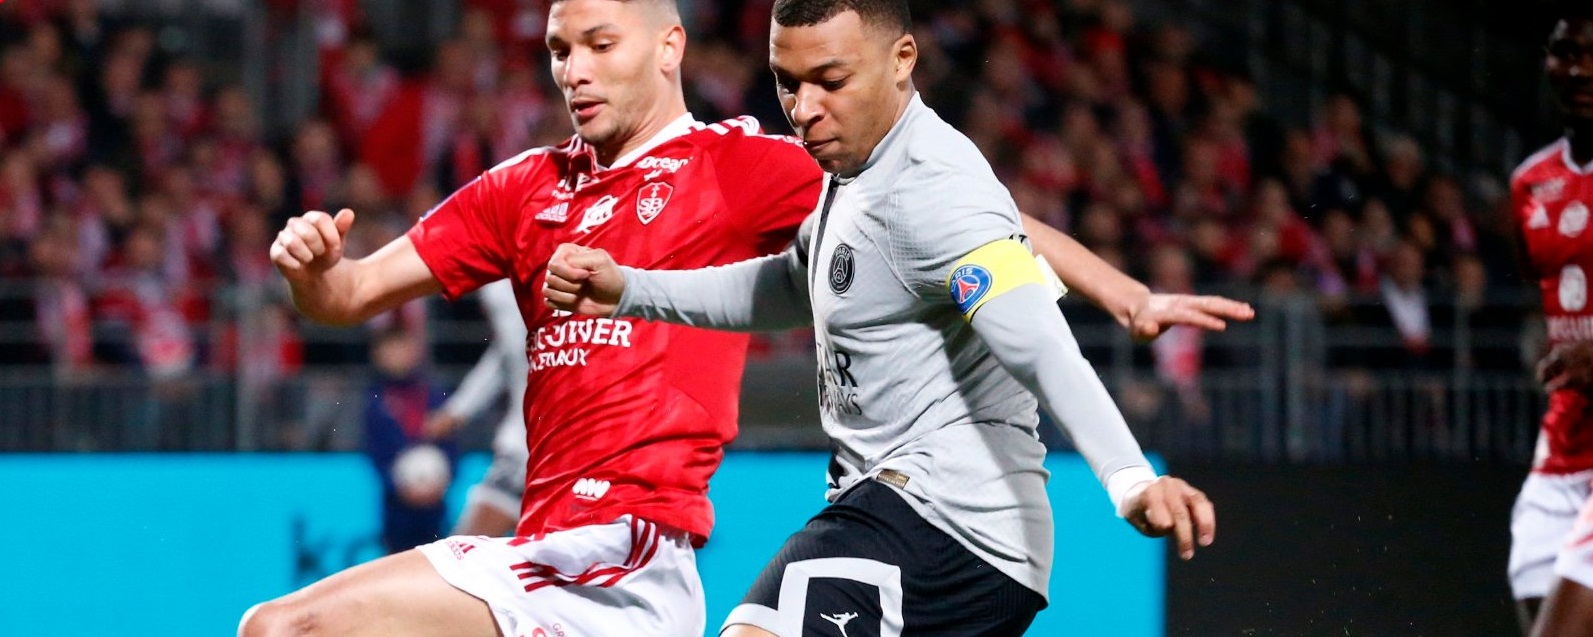 Gol Menit Akhir Kylian Mbappe Bawa PSG Menang Atas Brest